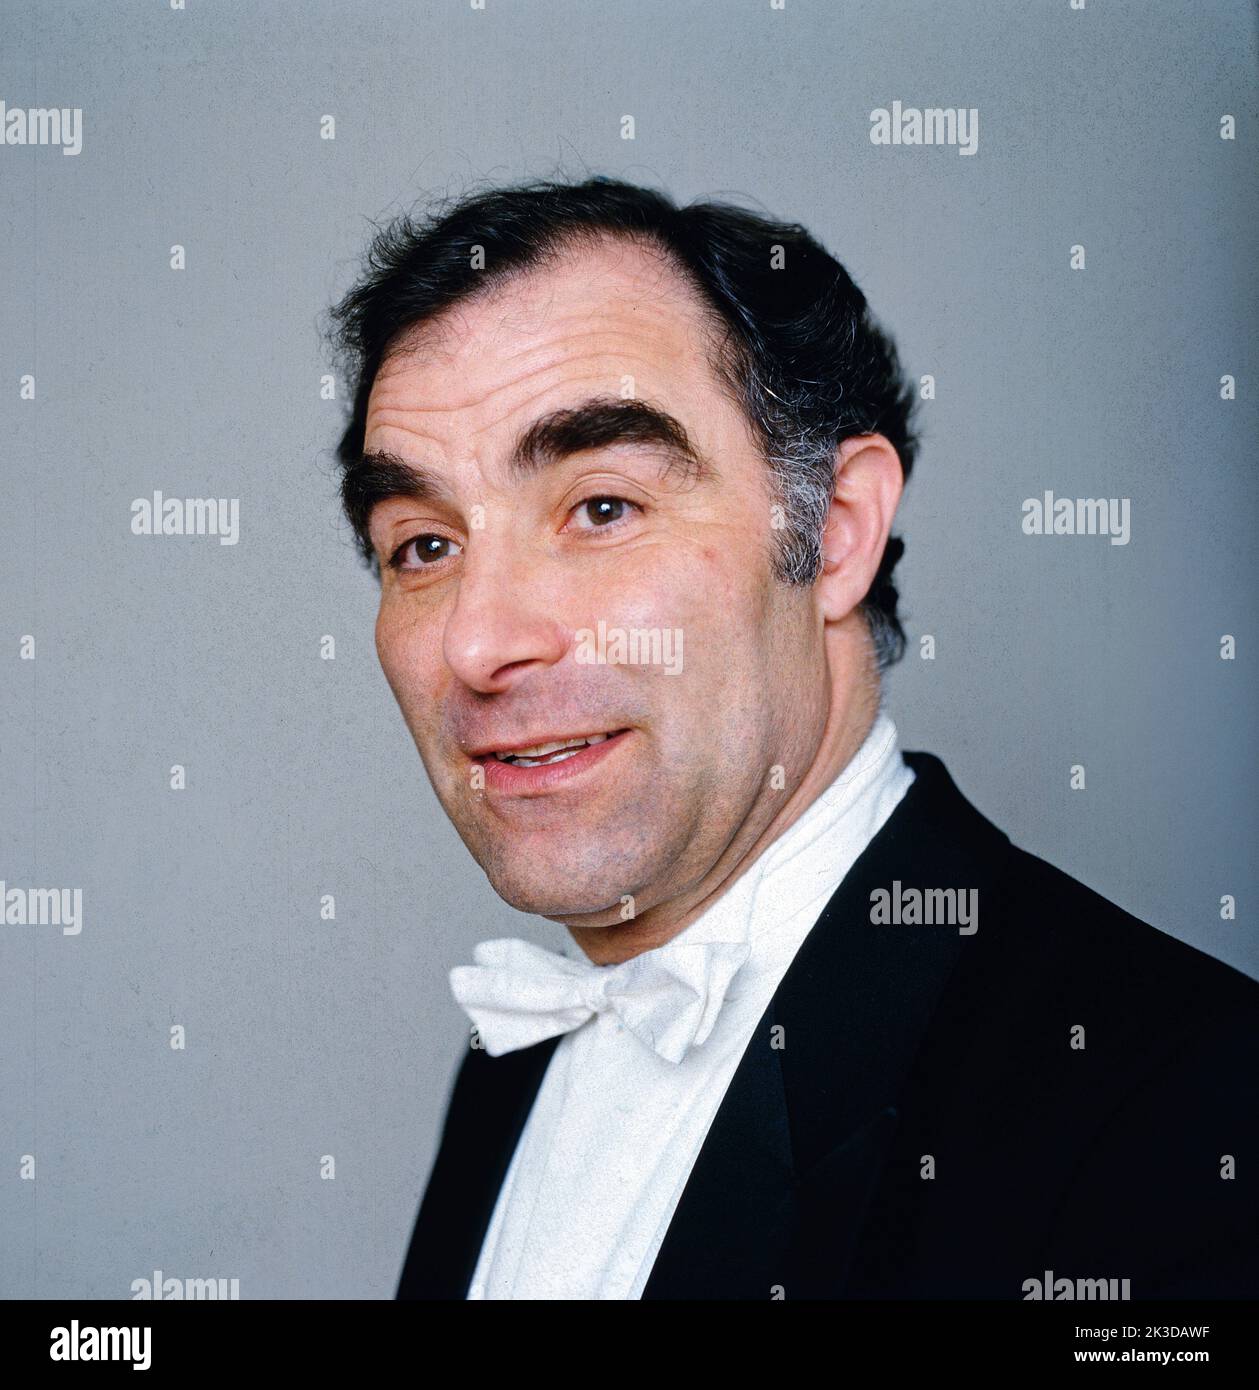 Roberto Benzi, Französisch-italienischer Dirigent, Retrato, Alemania, 1986. Roberto Benzi, director francés-italiano, retrato, Alemania, 1986. Foto de stock